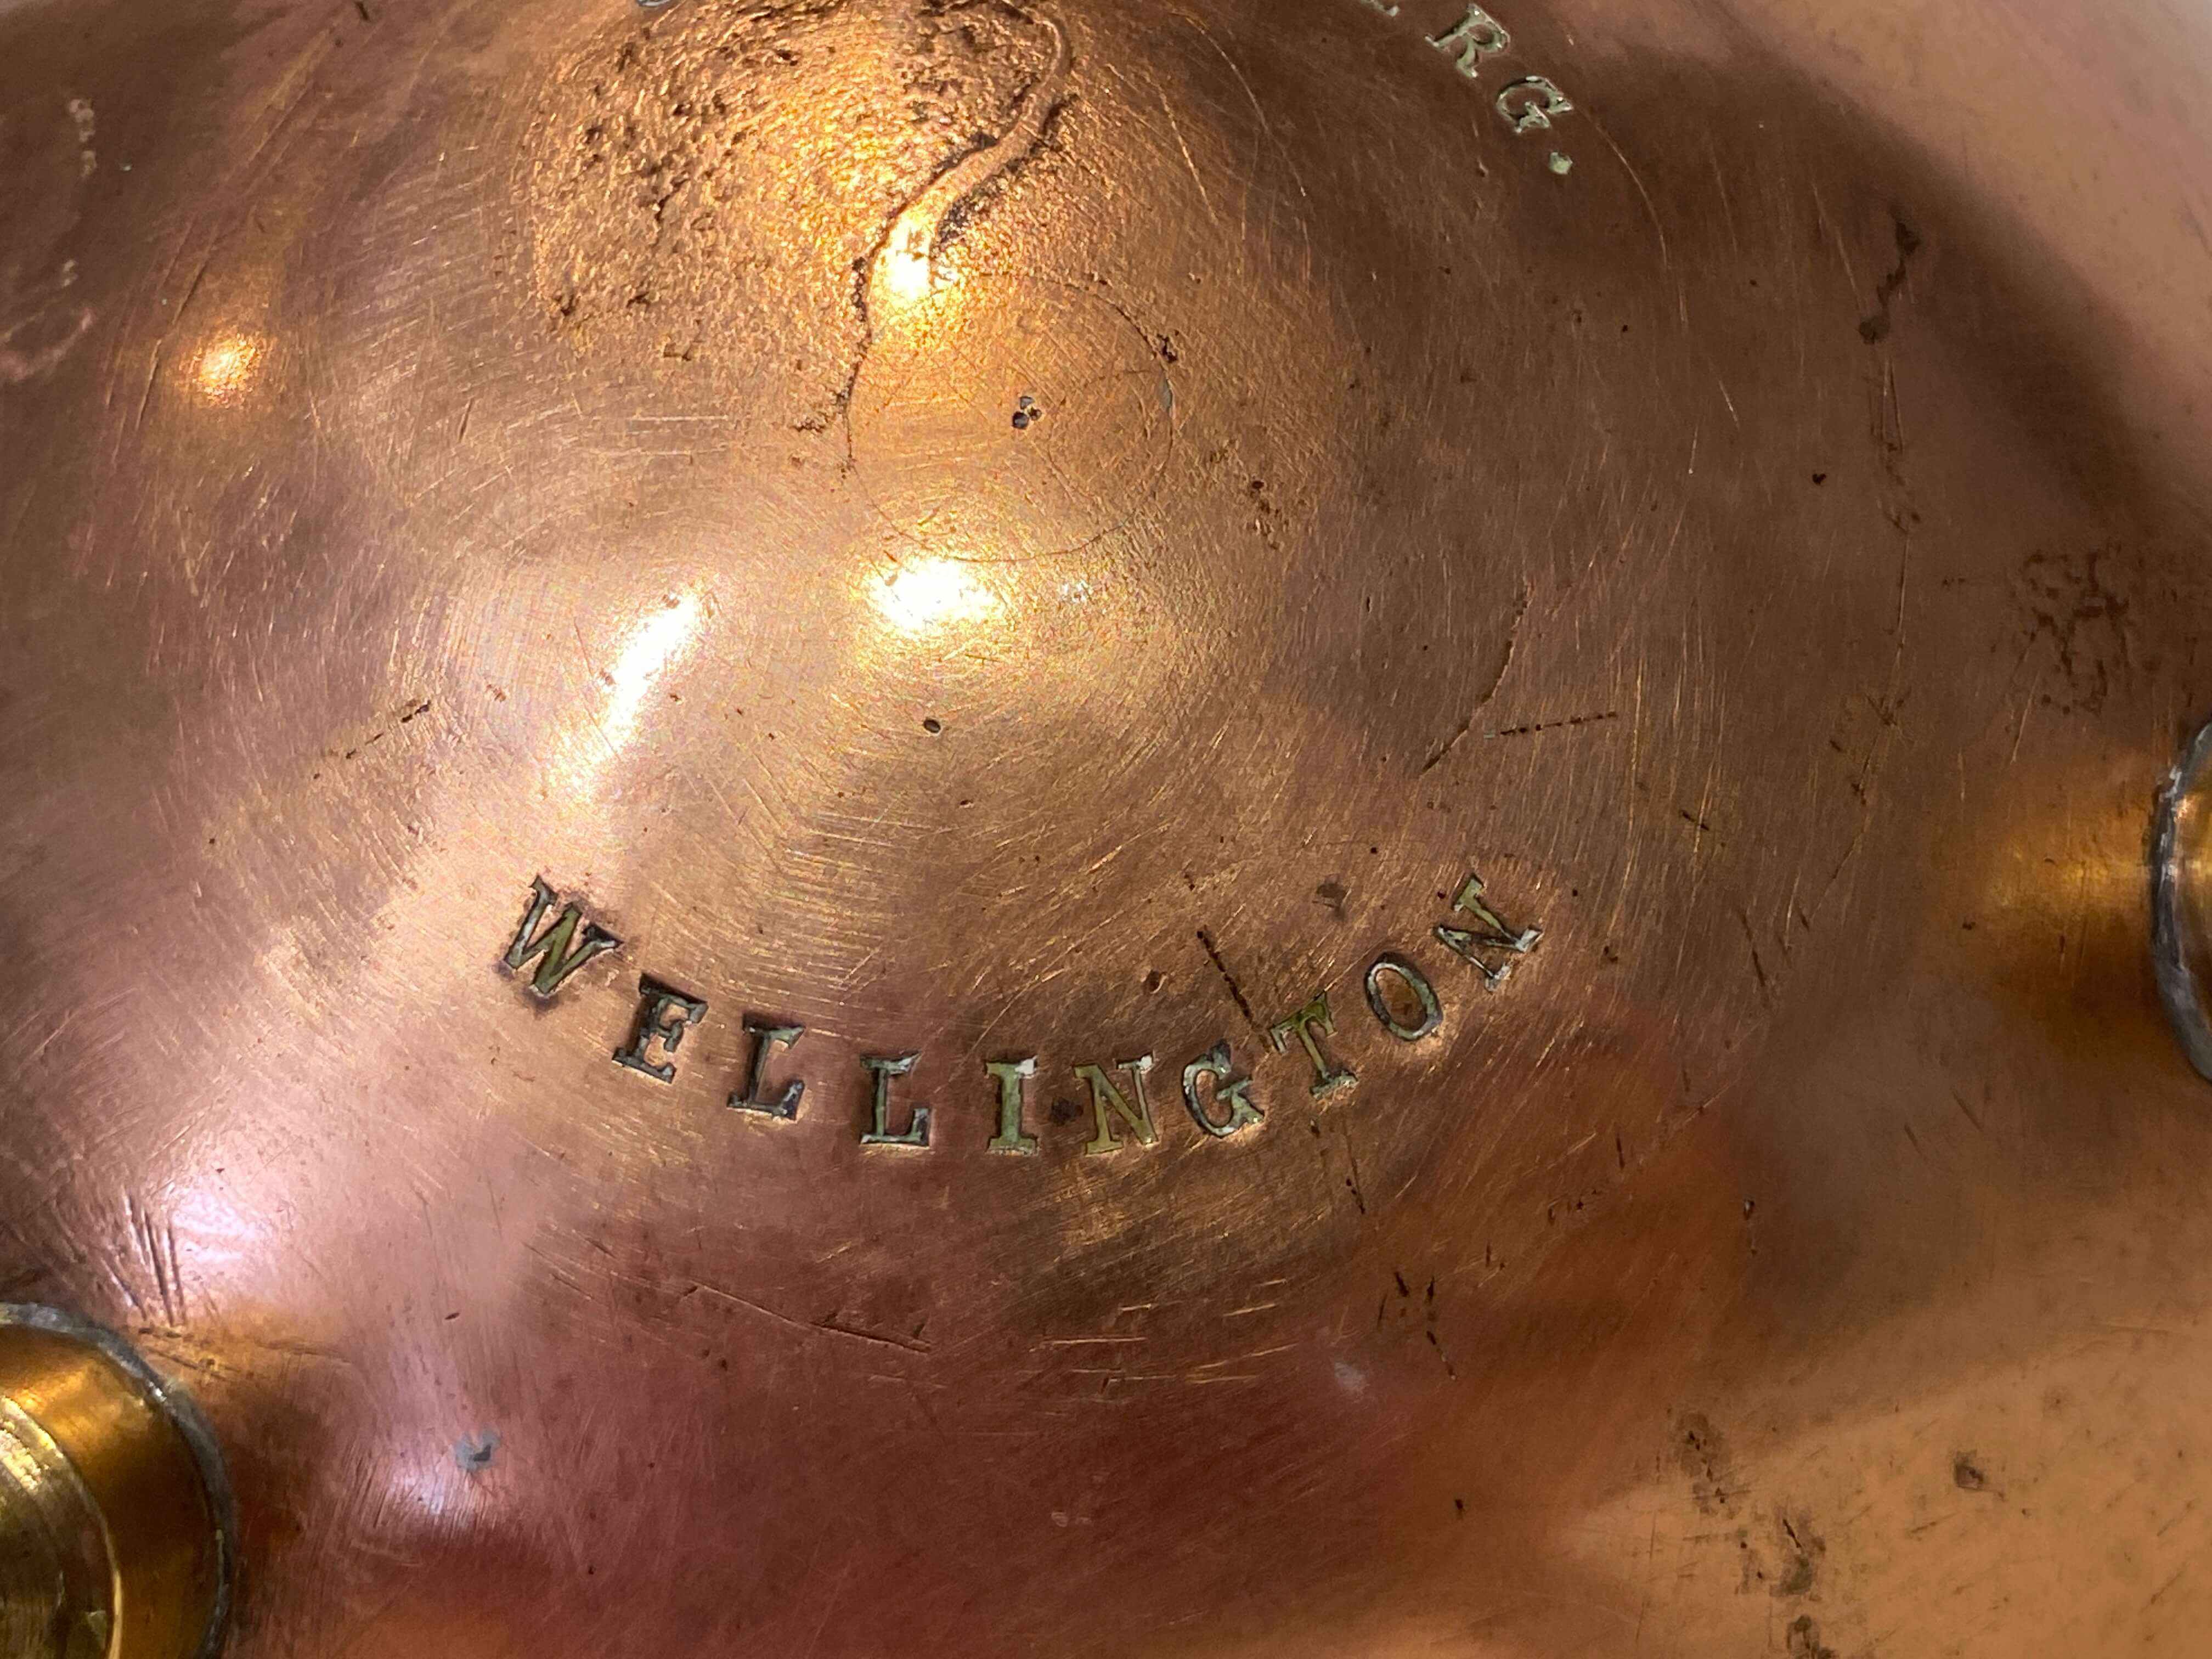 A Cape copper and brass bowl, Johannes Marthinus Woudberg (IV), Wellington, 20th century